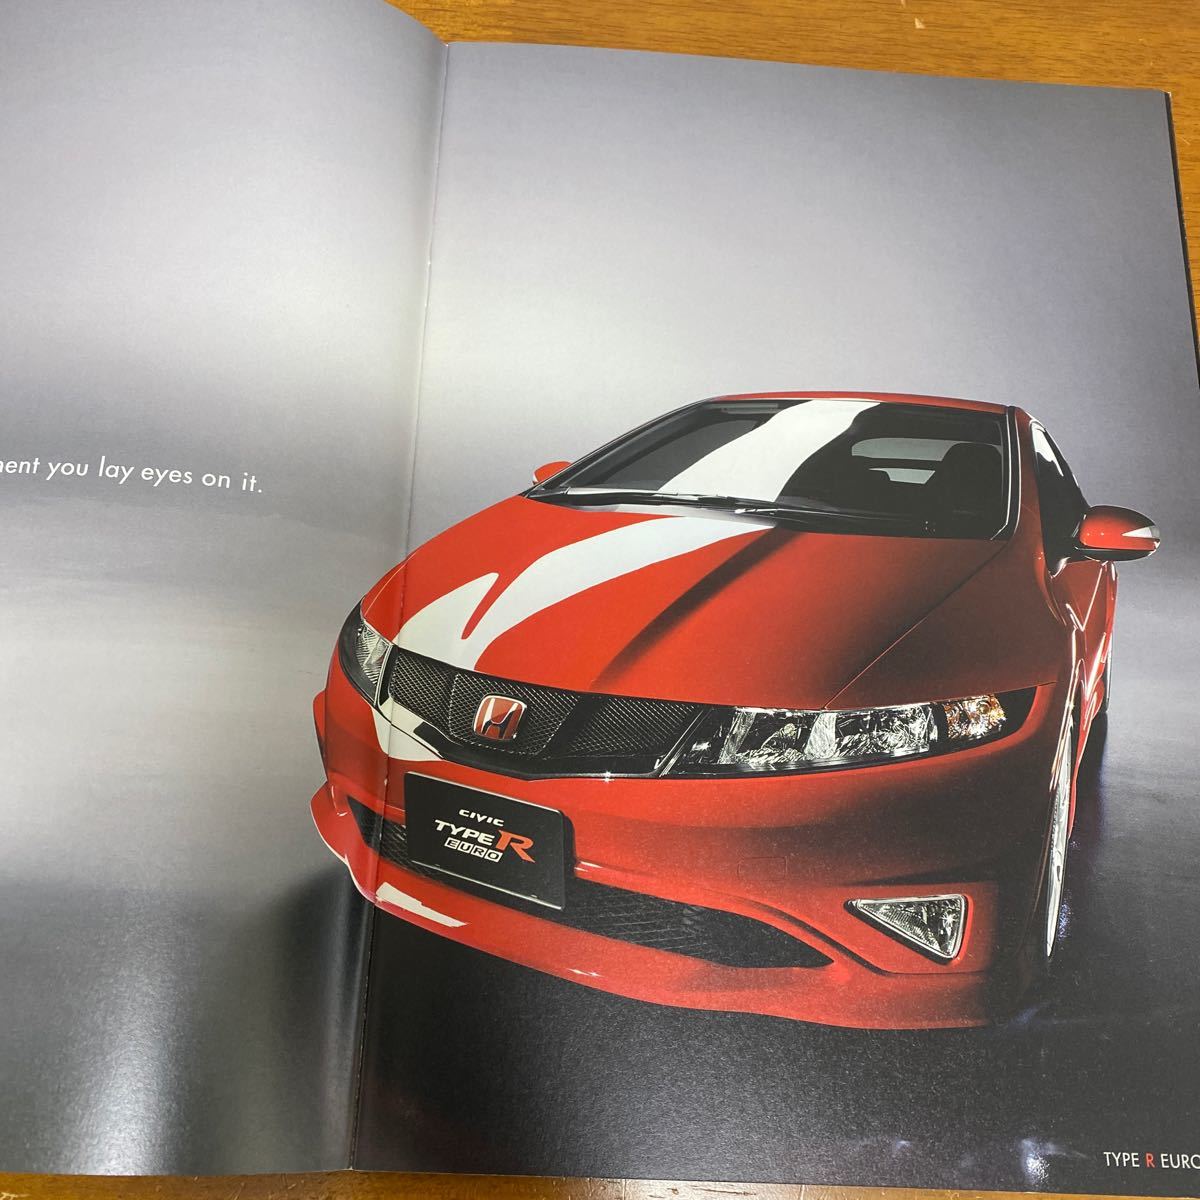  Honda Civic type R евро каталог комплект (2009.11) аксессуары каталог typeR HONDA